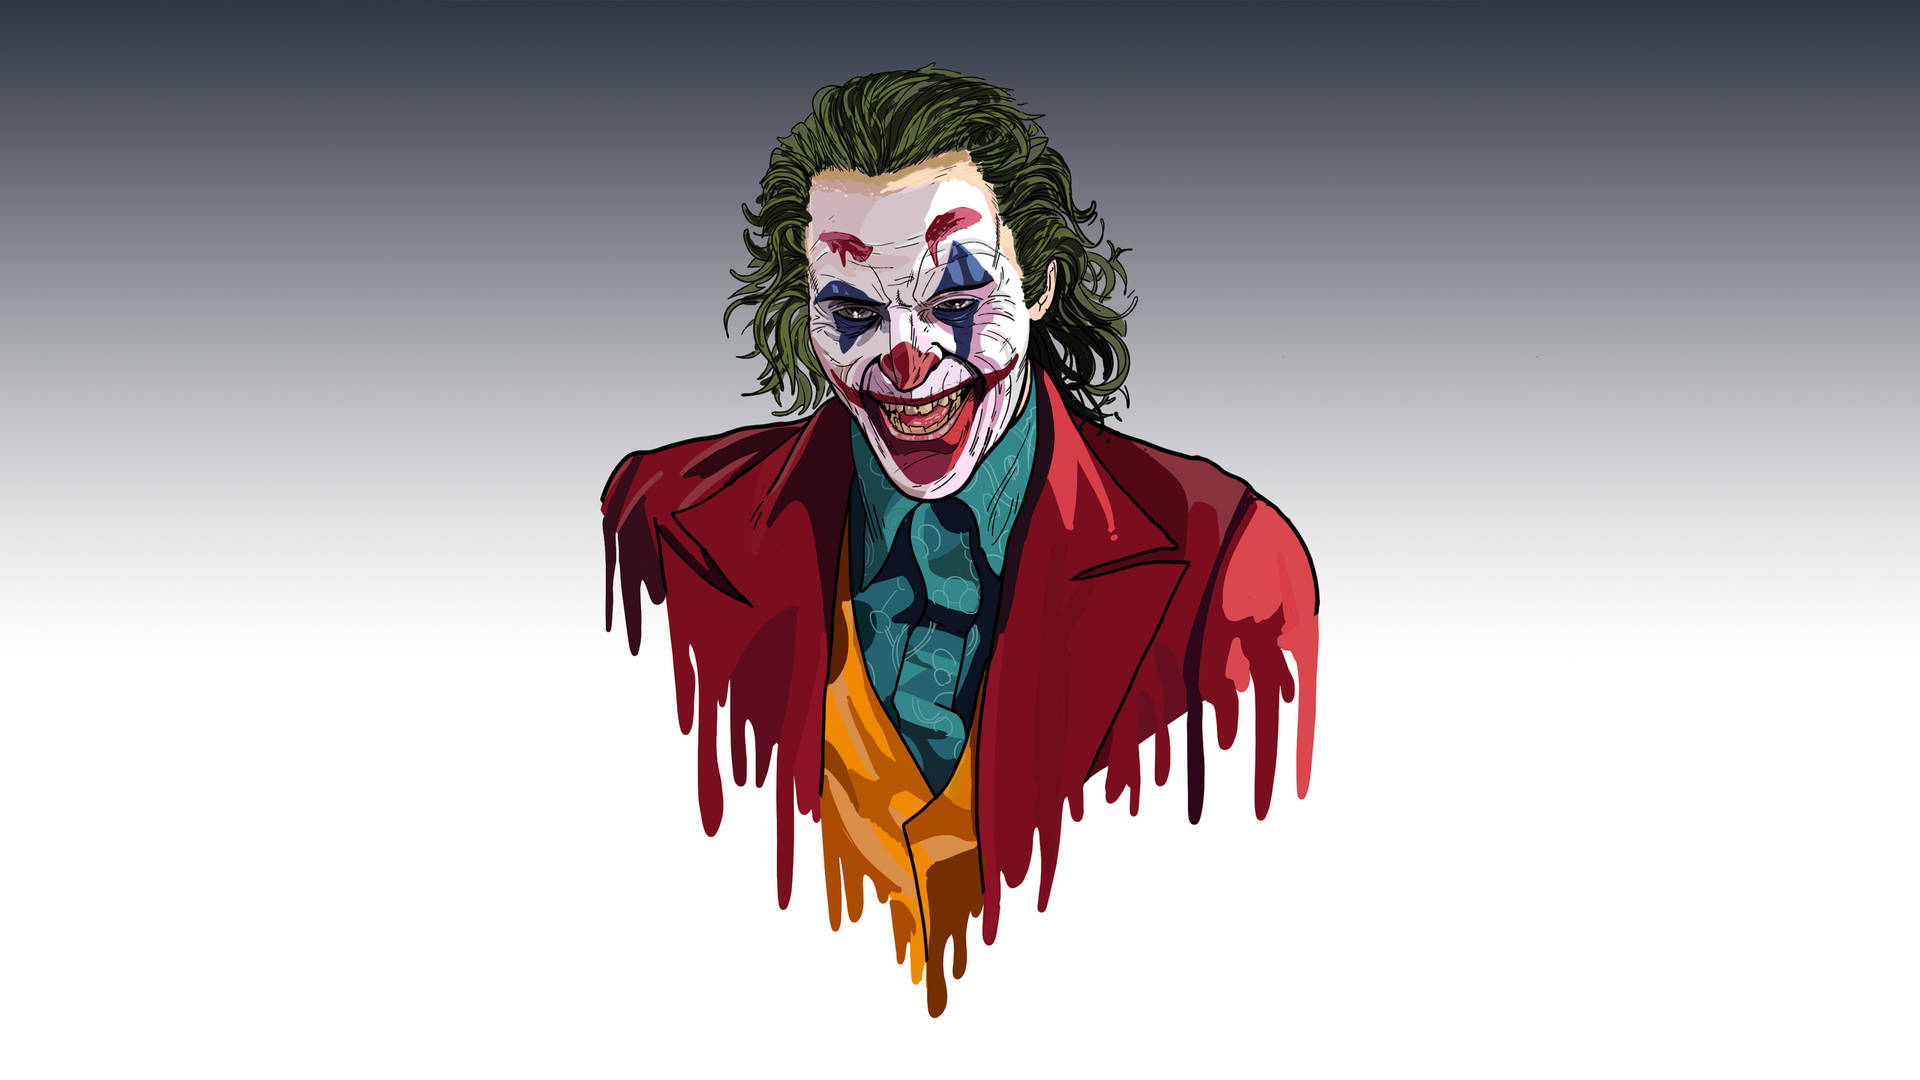 Joker 2019 Bust Sketch